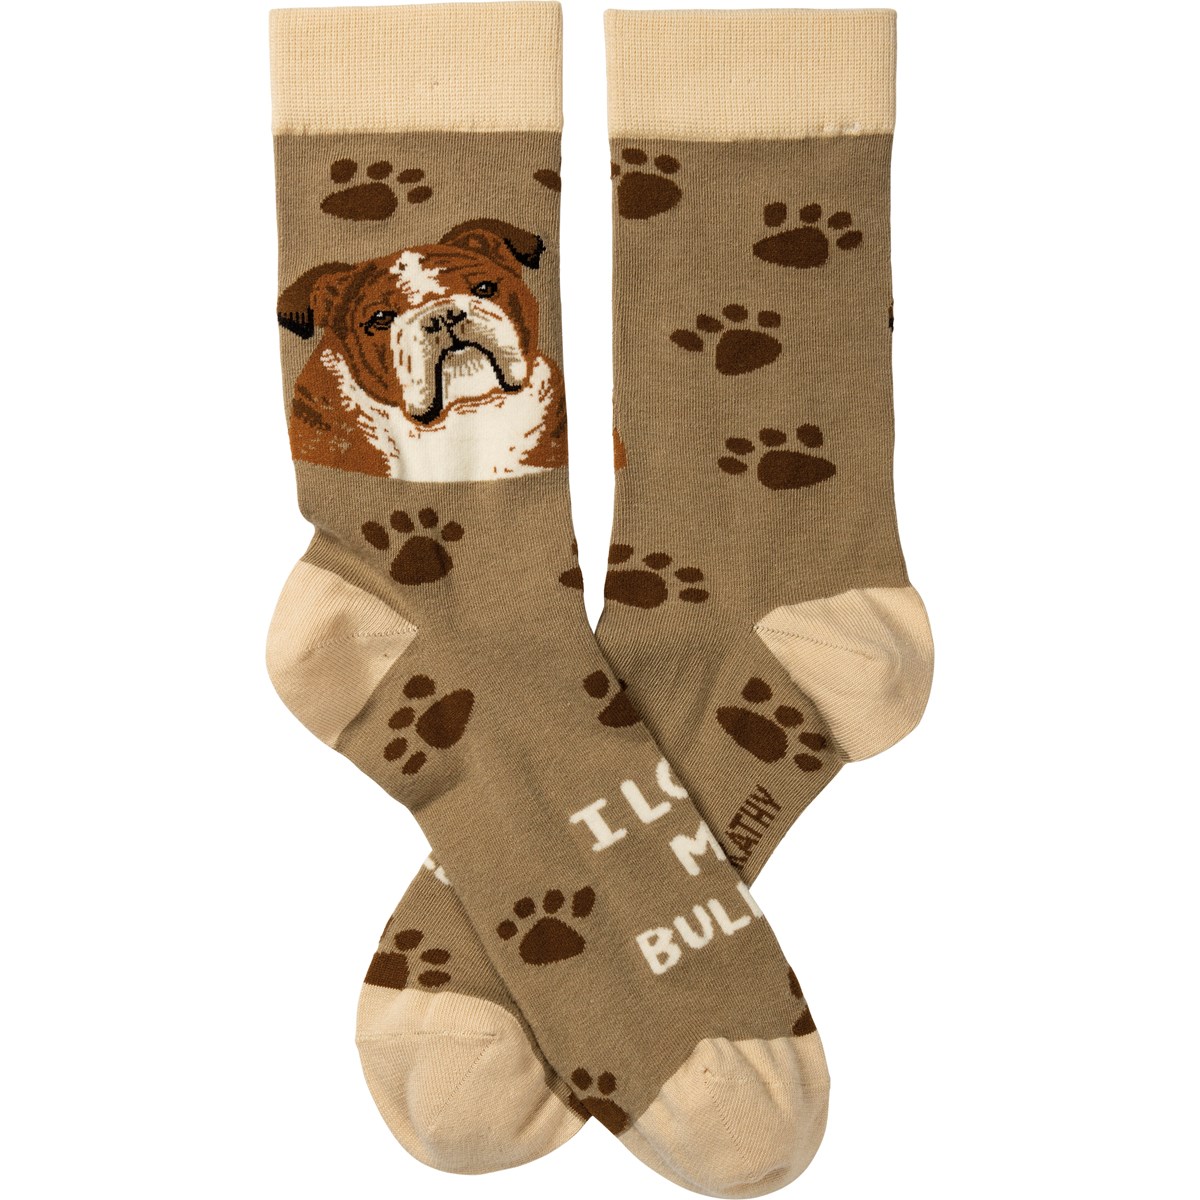 I Love My Bulldog Socks - Cotton, Nylon, Spandex